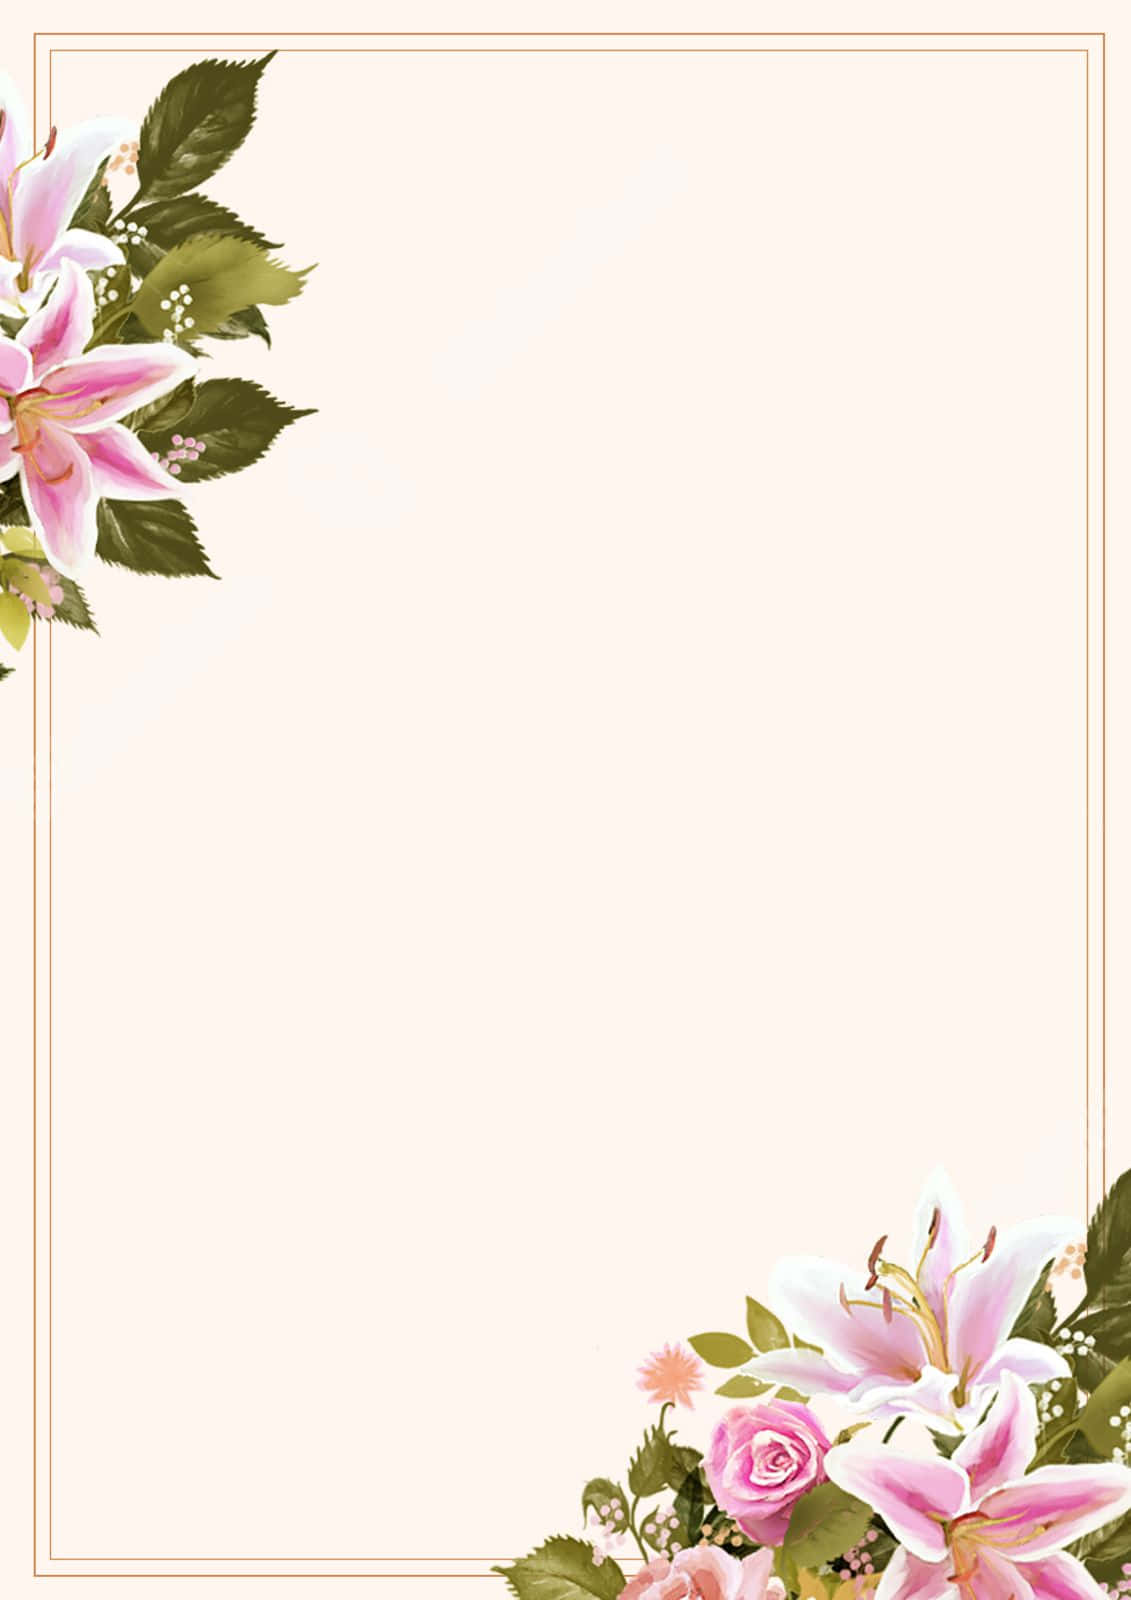 Enchanting Flower Border Enhancing Garden Beauty Wallpaper